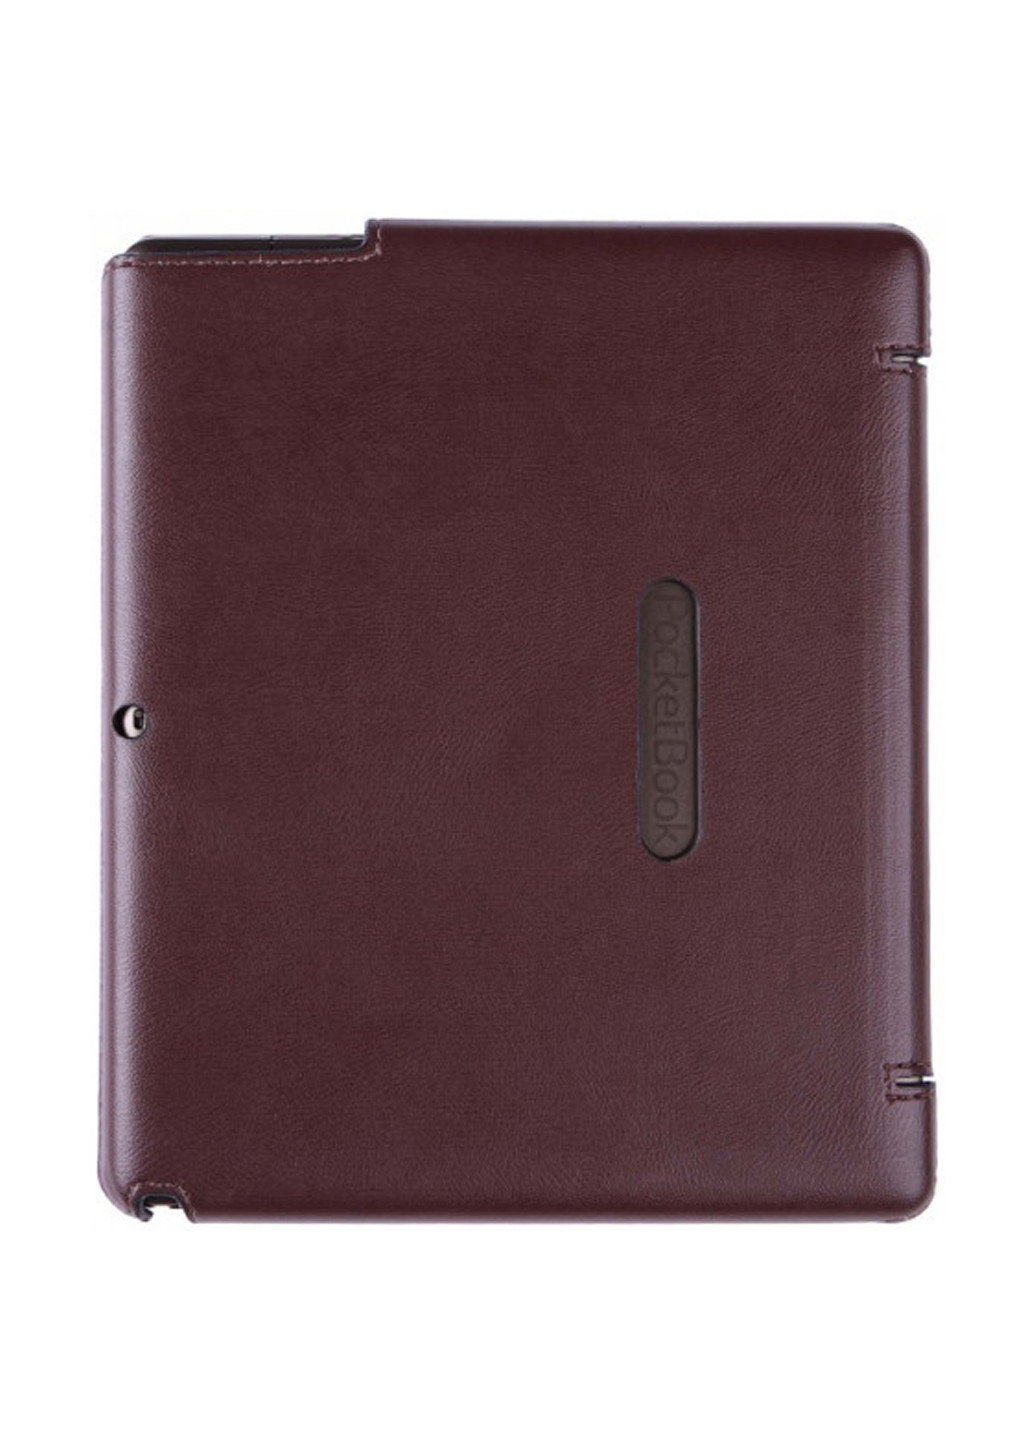 Чохол Premium для PocketBook 840 brown (4821784622004) Airon premium для электронной книги pocketbook 840 brown (4821784622004) (158554737)